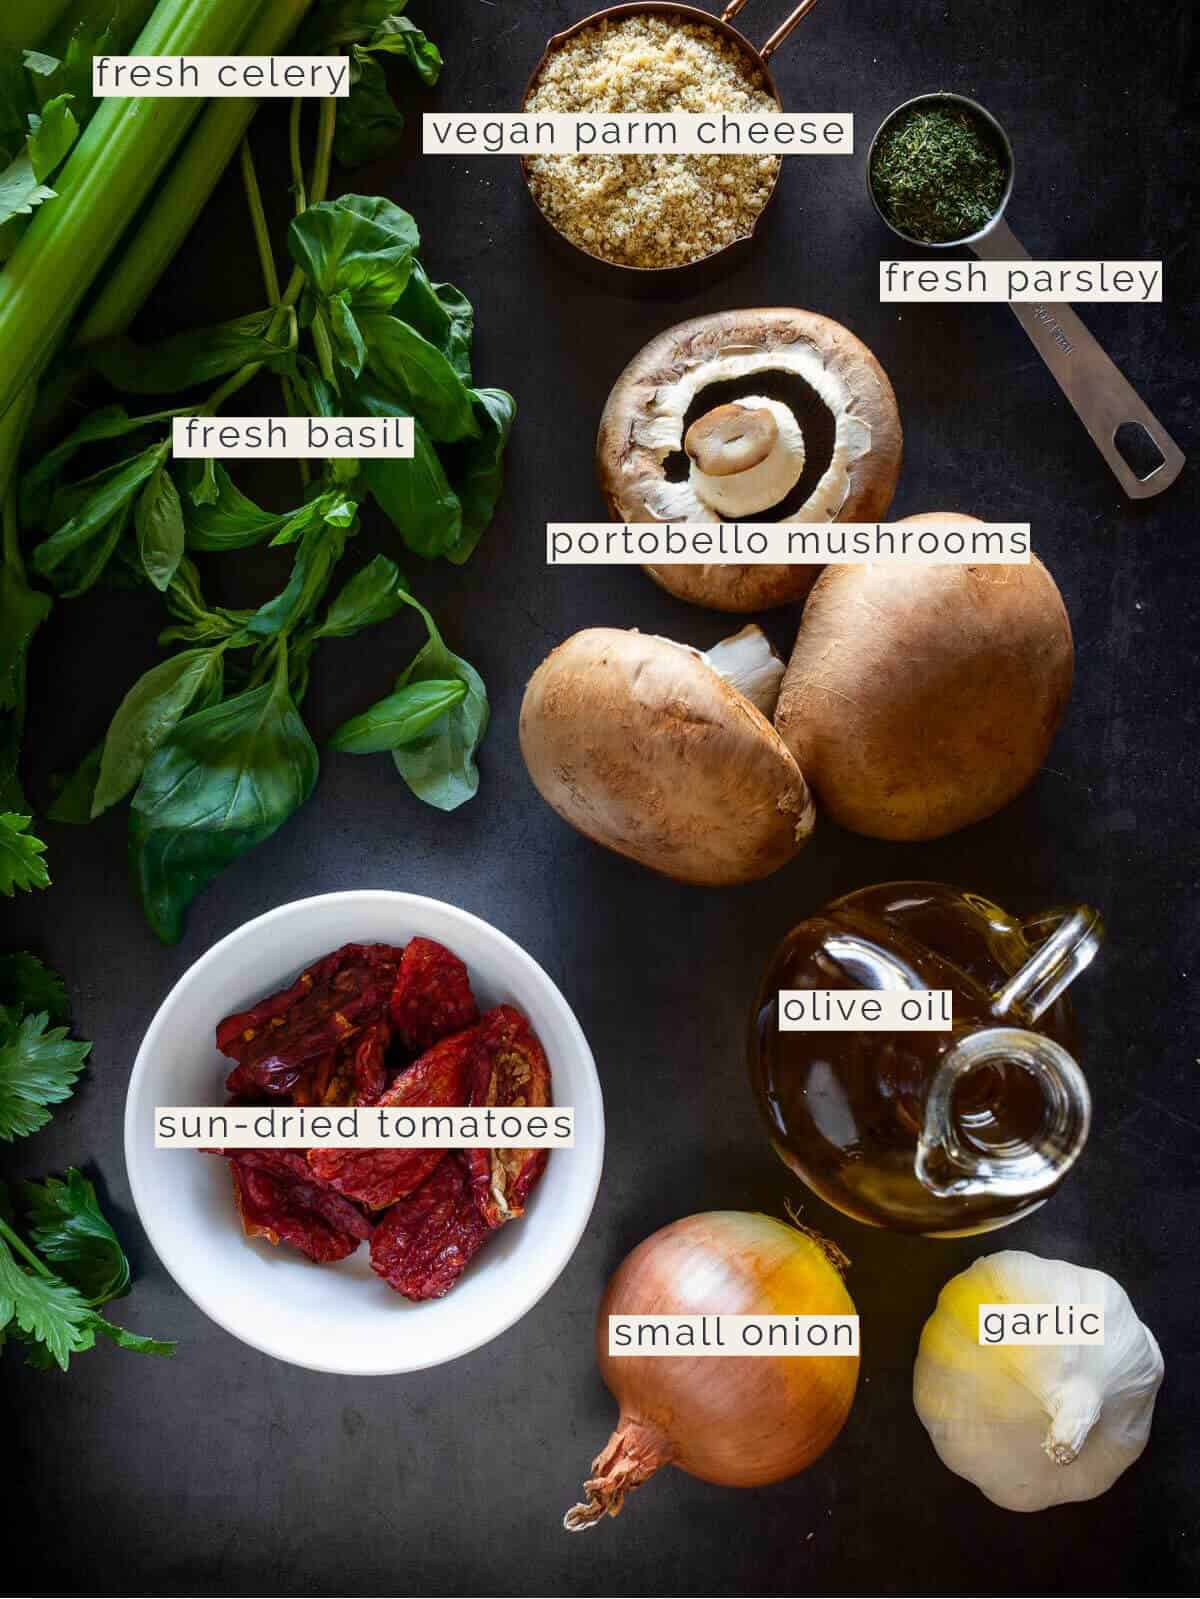 vegan stuffed portobello mushrooms recipe ingredients.